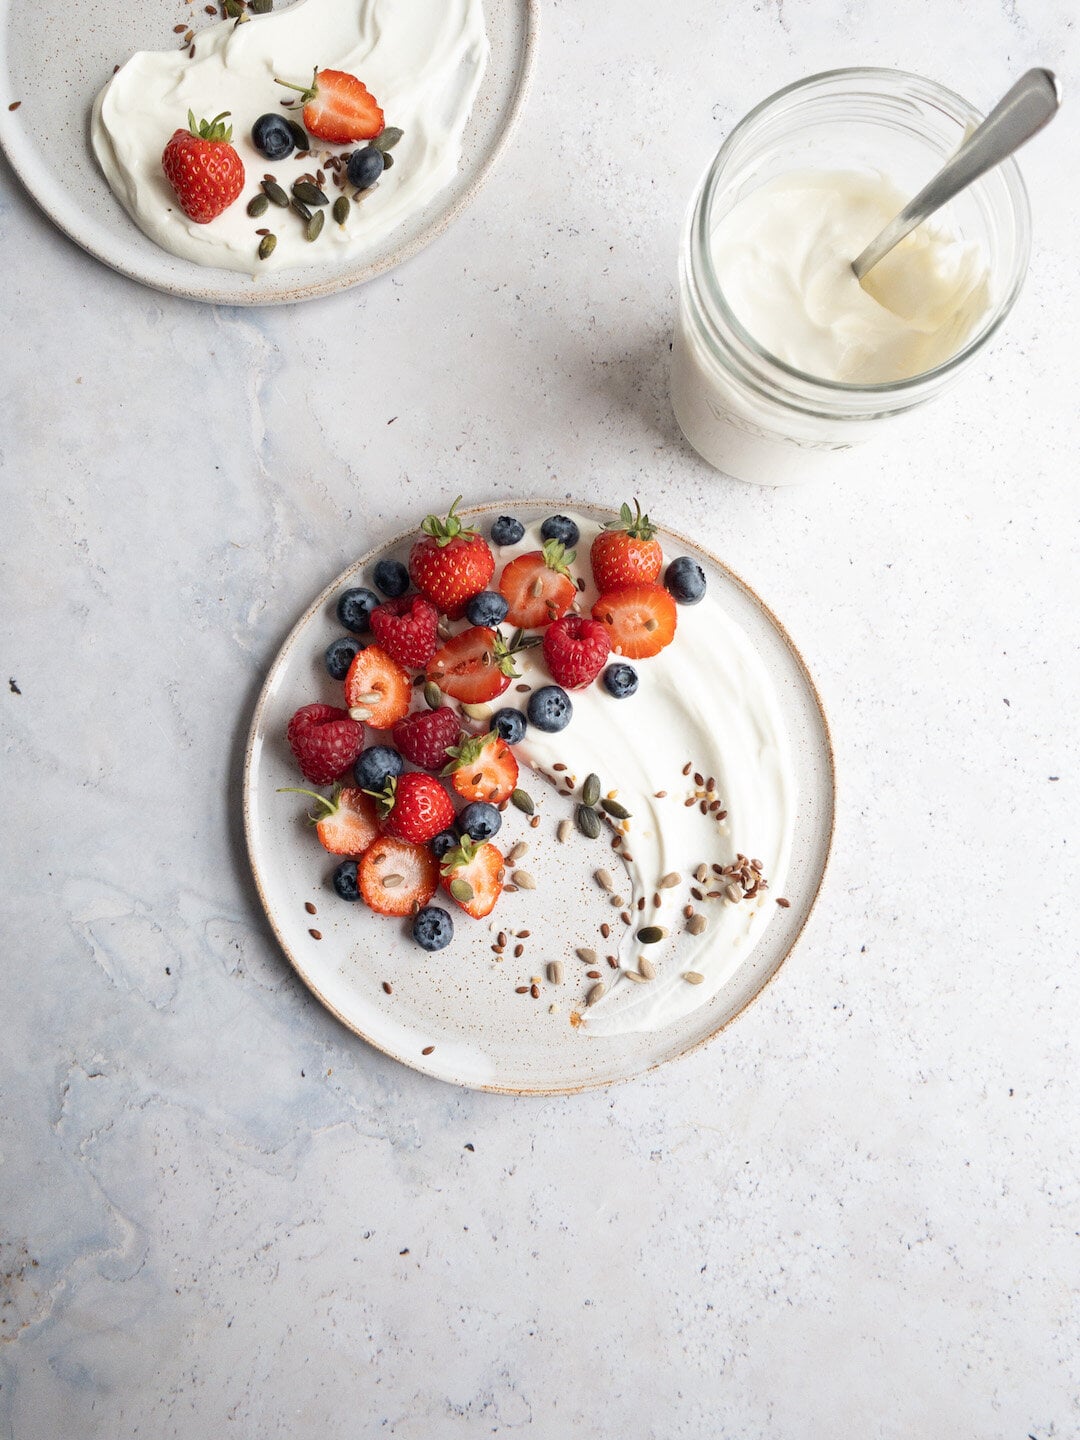 Live yoghurt benefits | The Gut Health Doctor